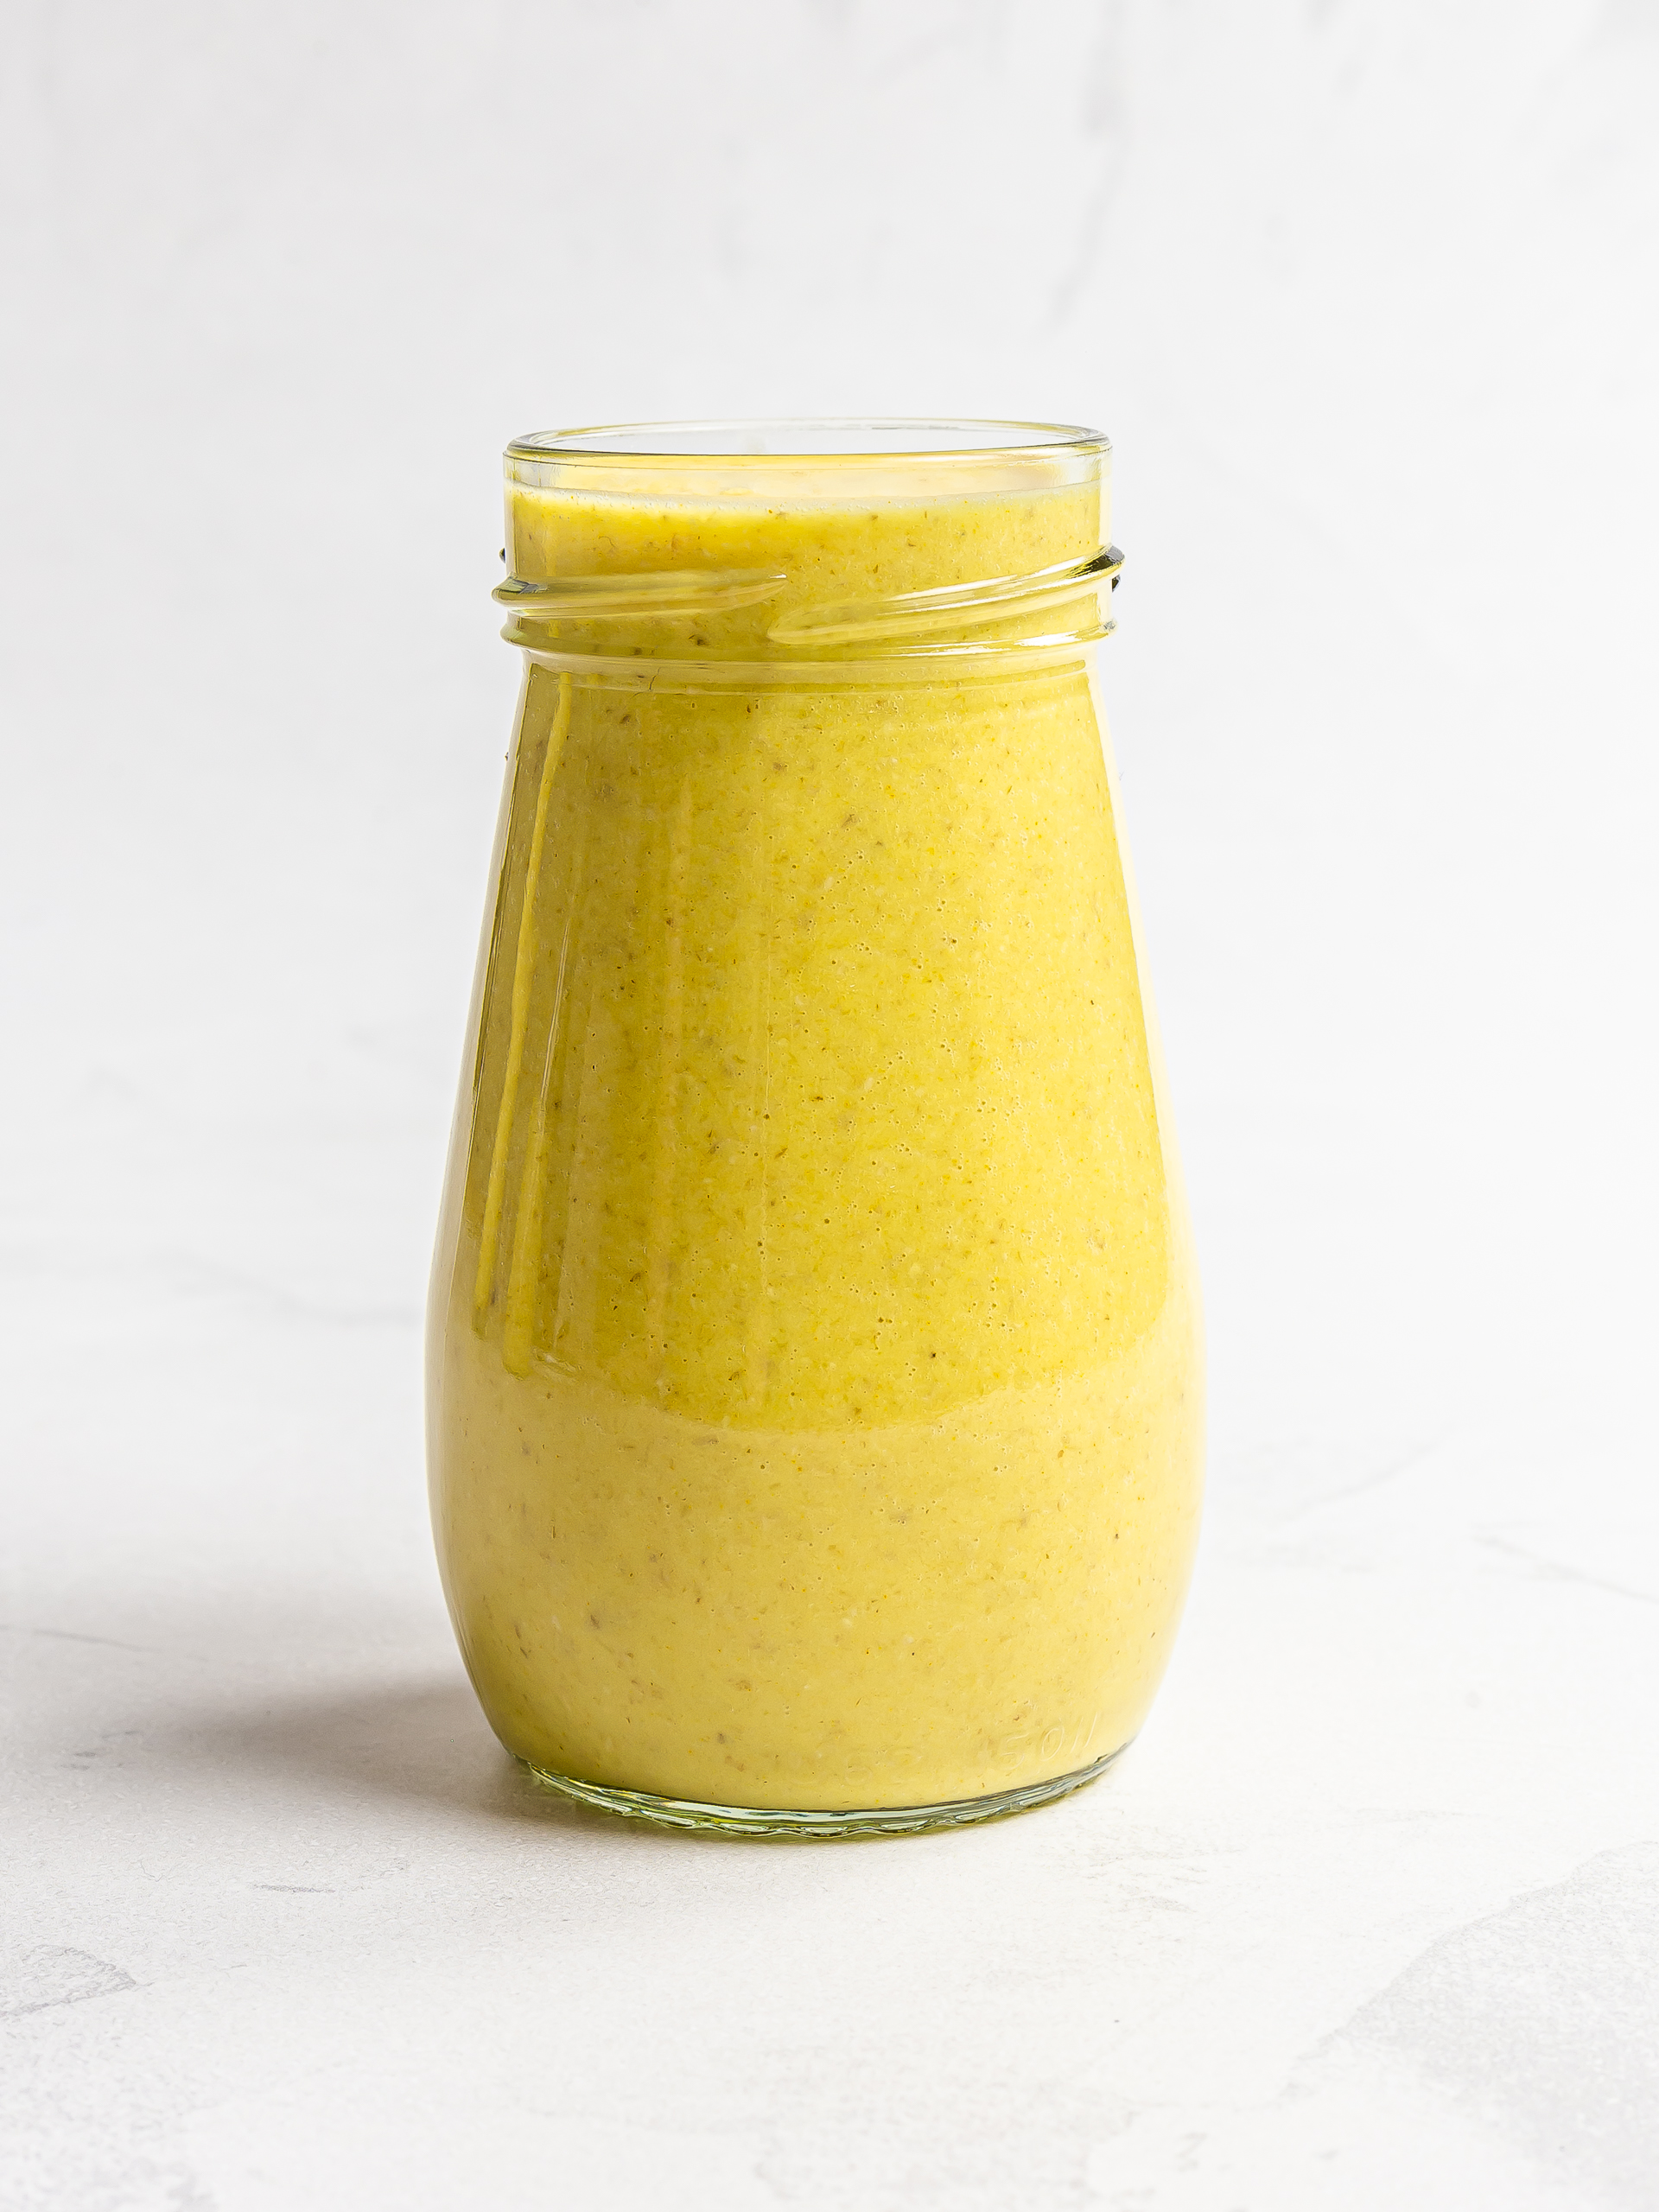 mango oat smoothie in a jar